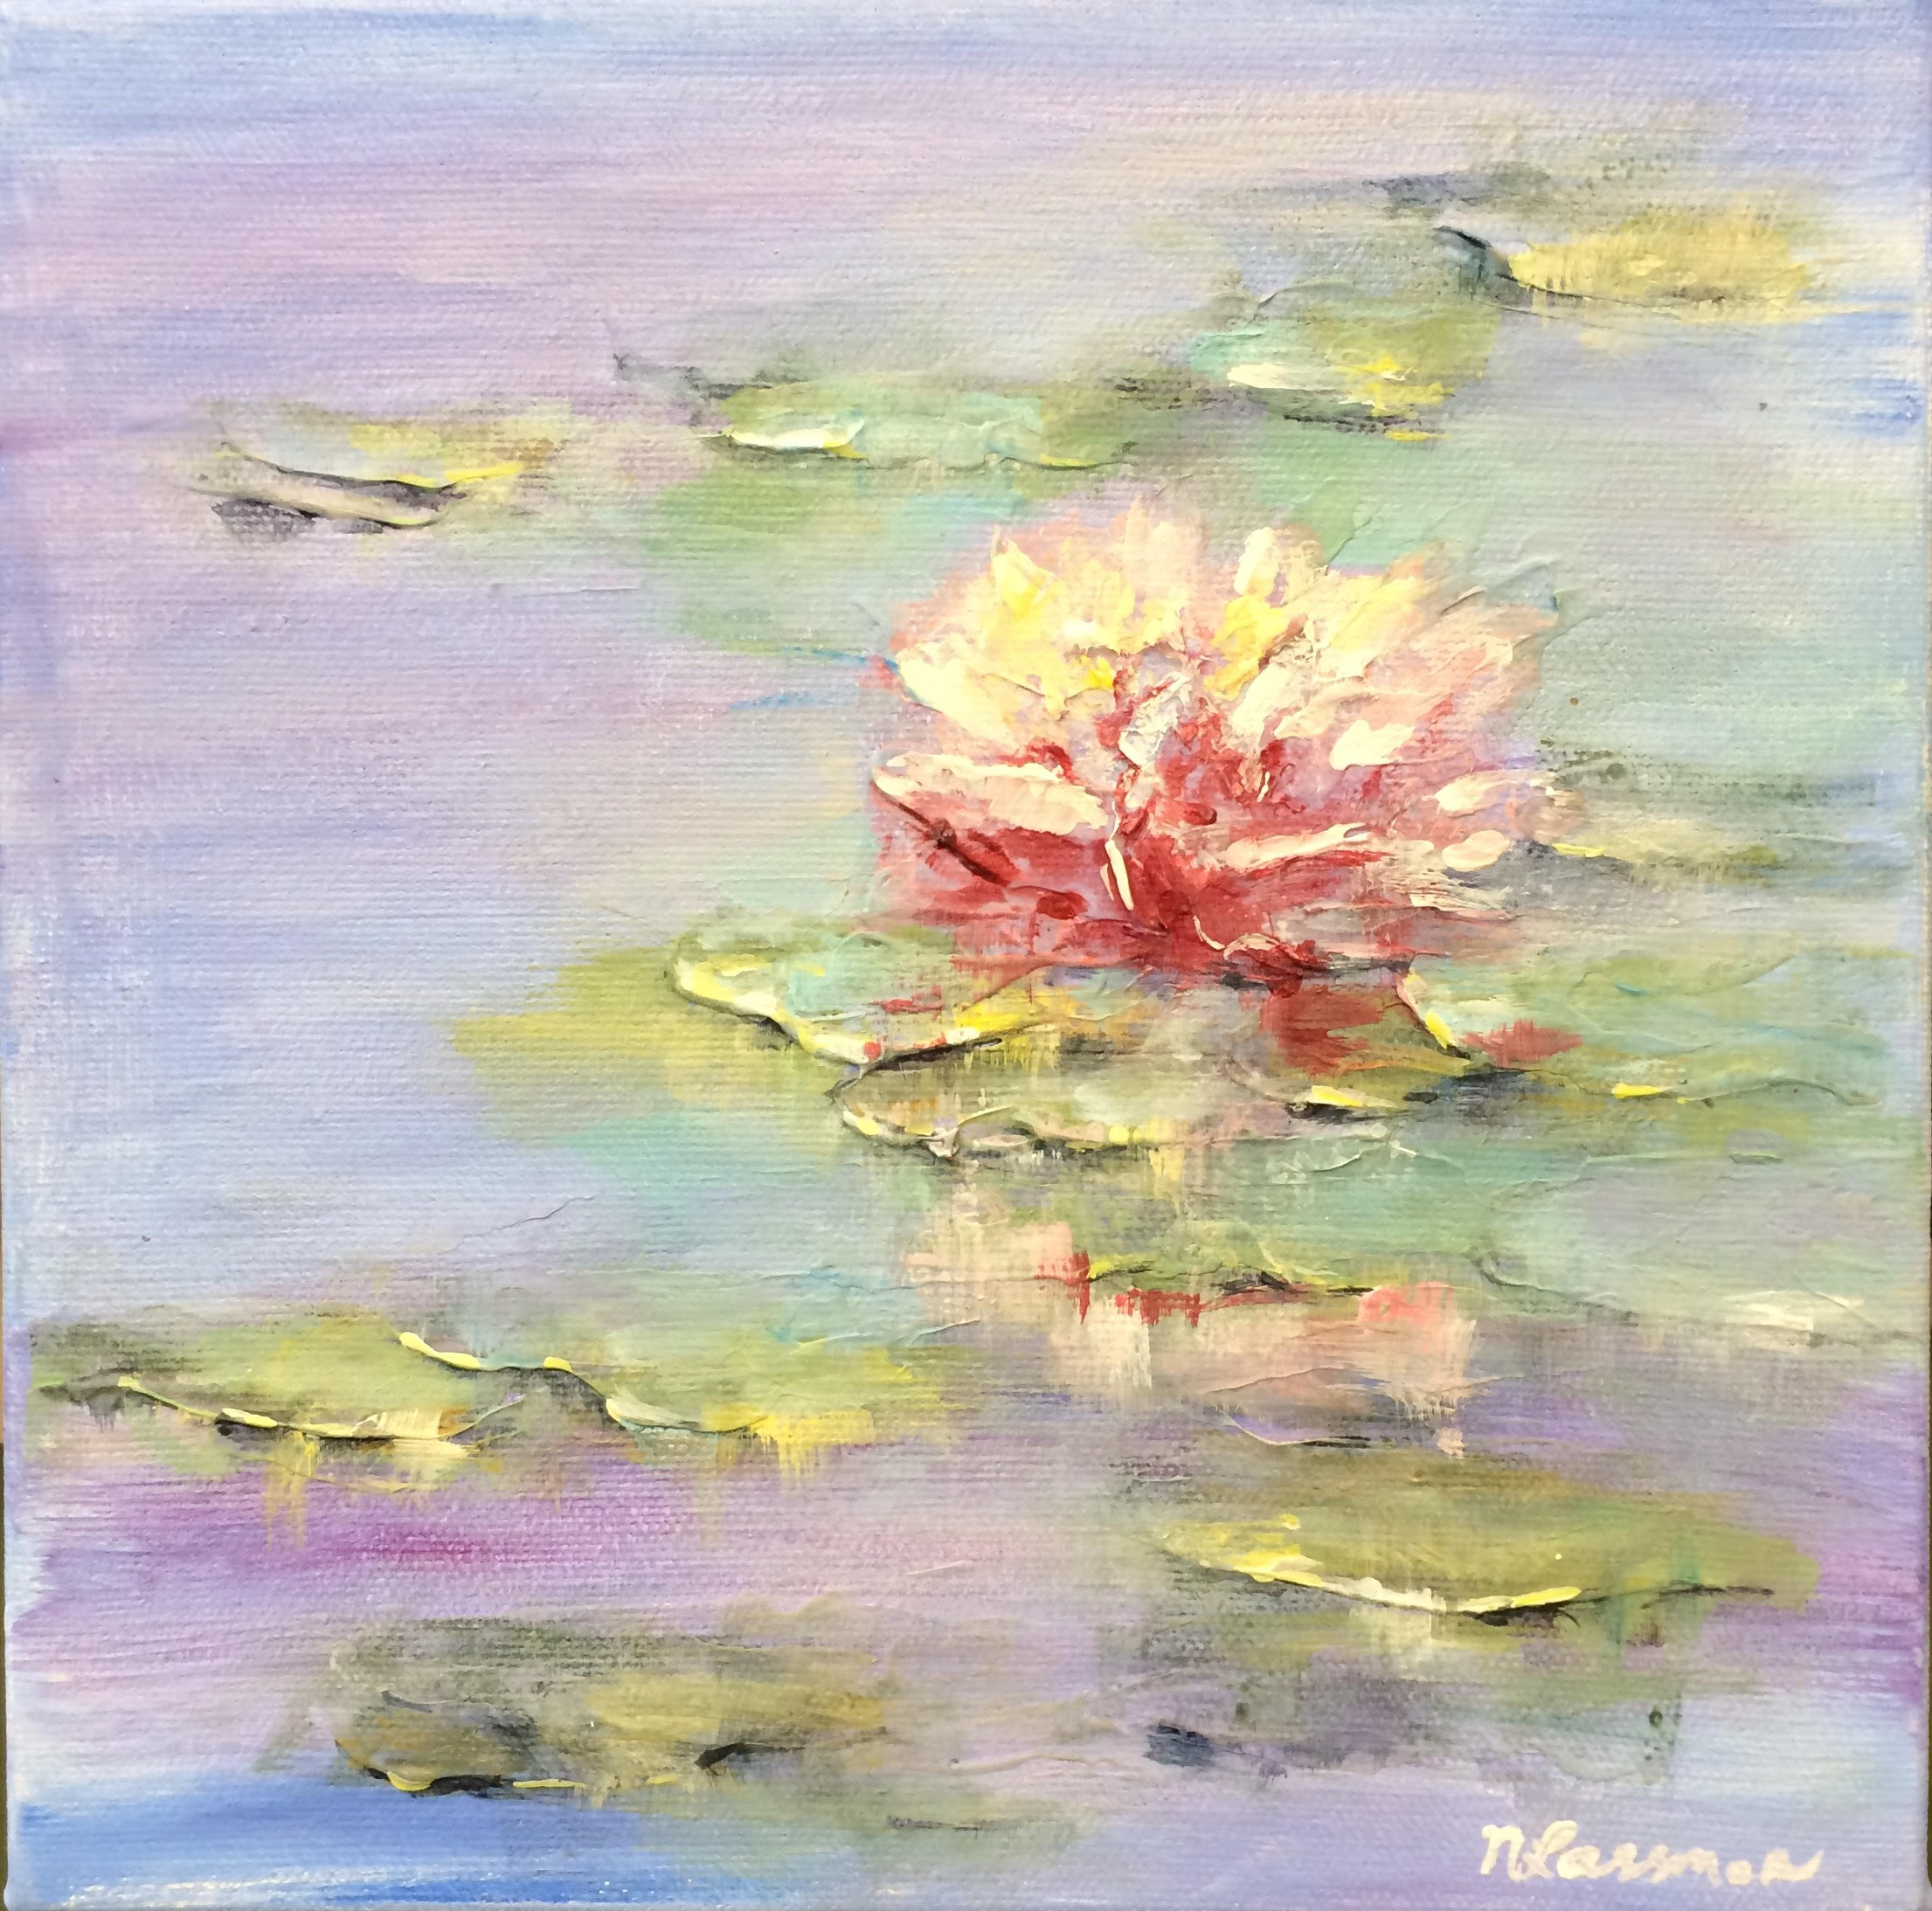 sweet lily monet image painting nadia Lassman art toronto